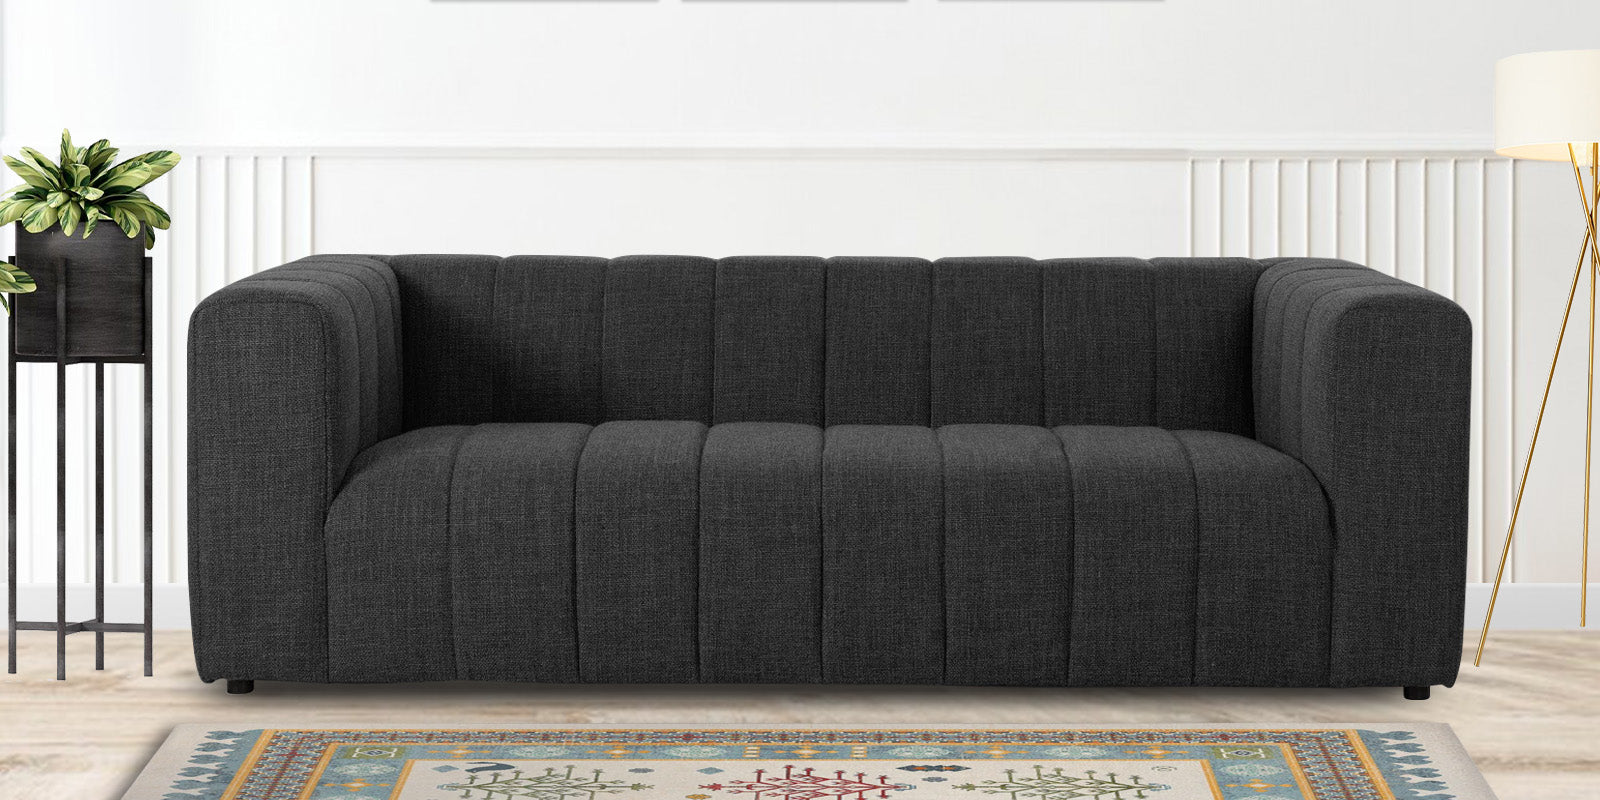 Lara Fabric 3 Seater Sofa in Charcoal Grey Colour